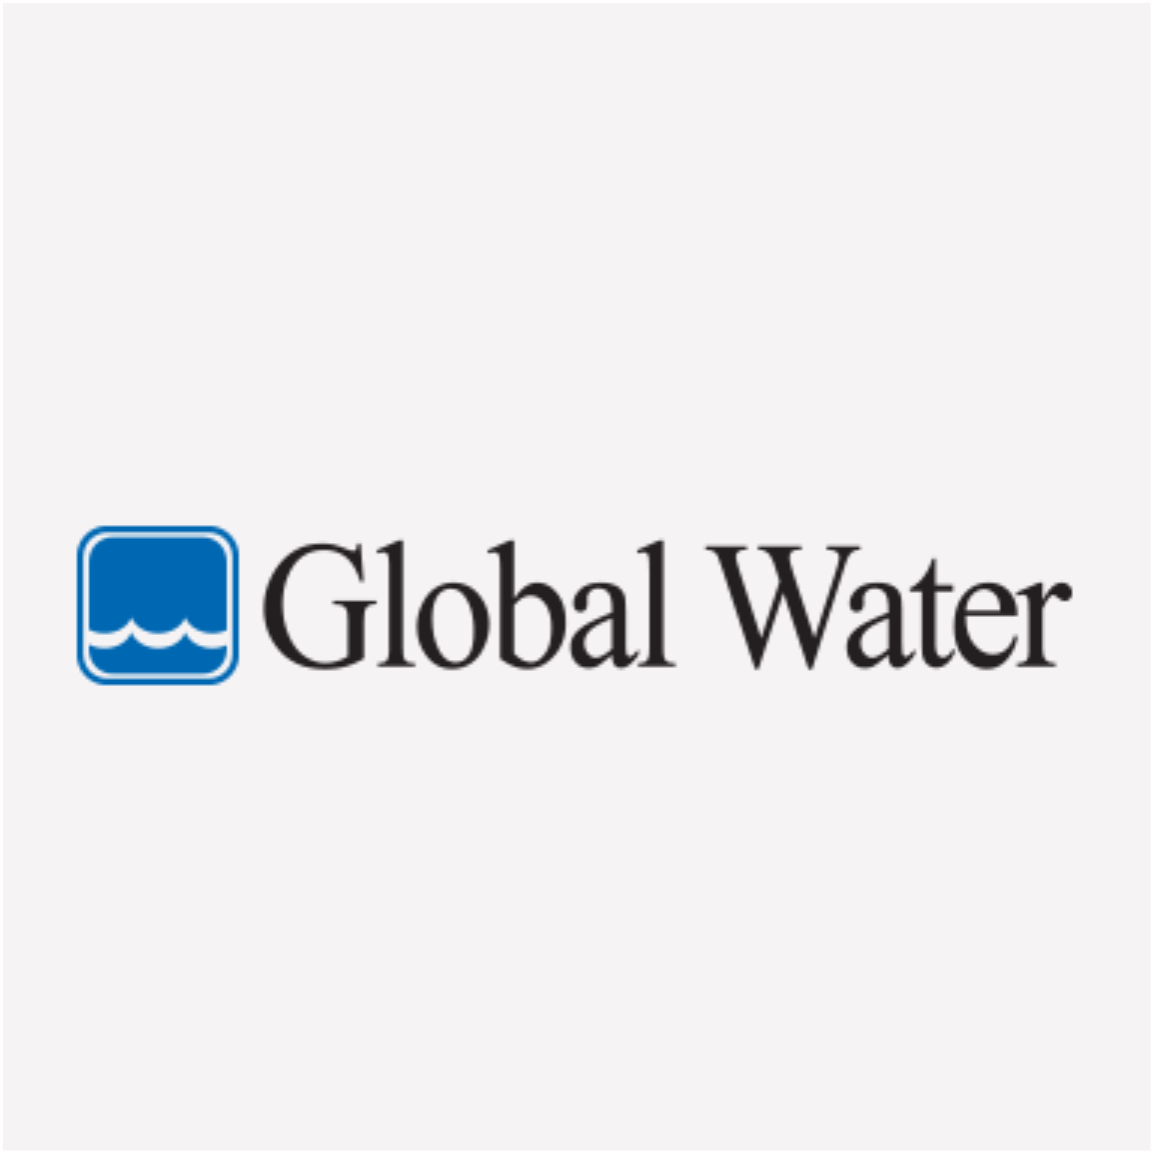 globalwater_logo